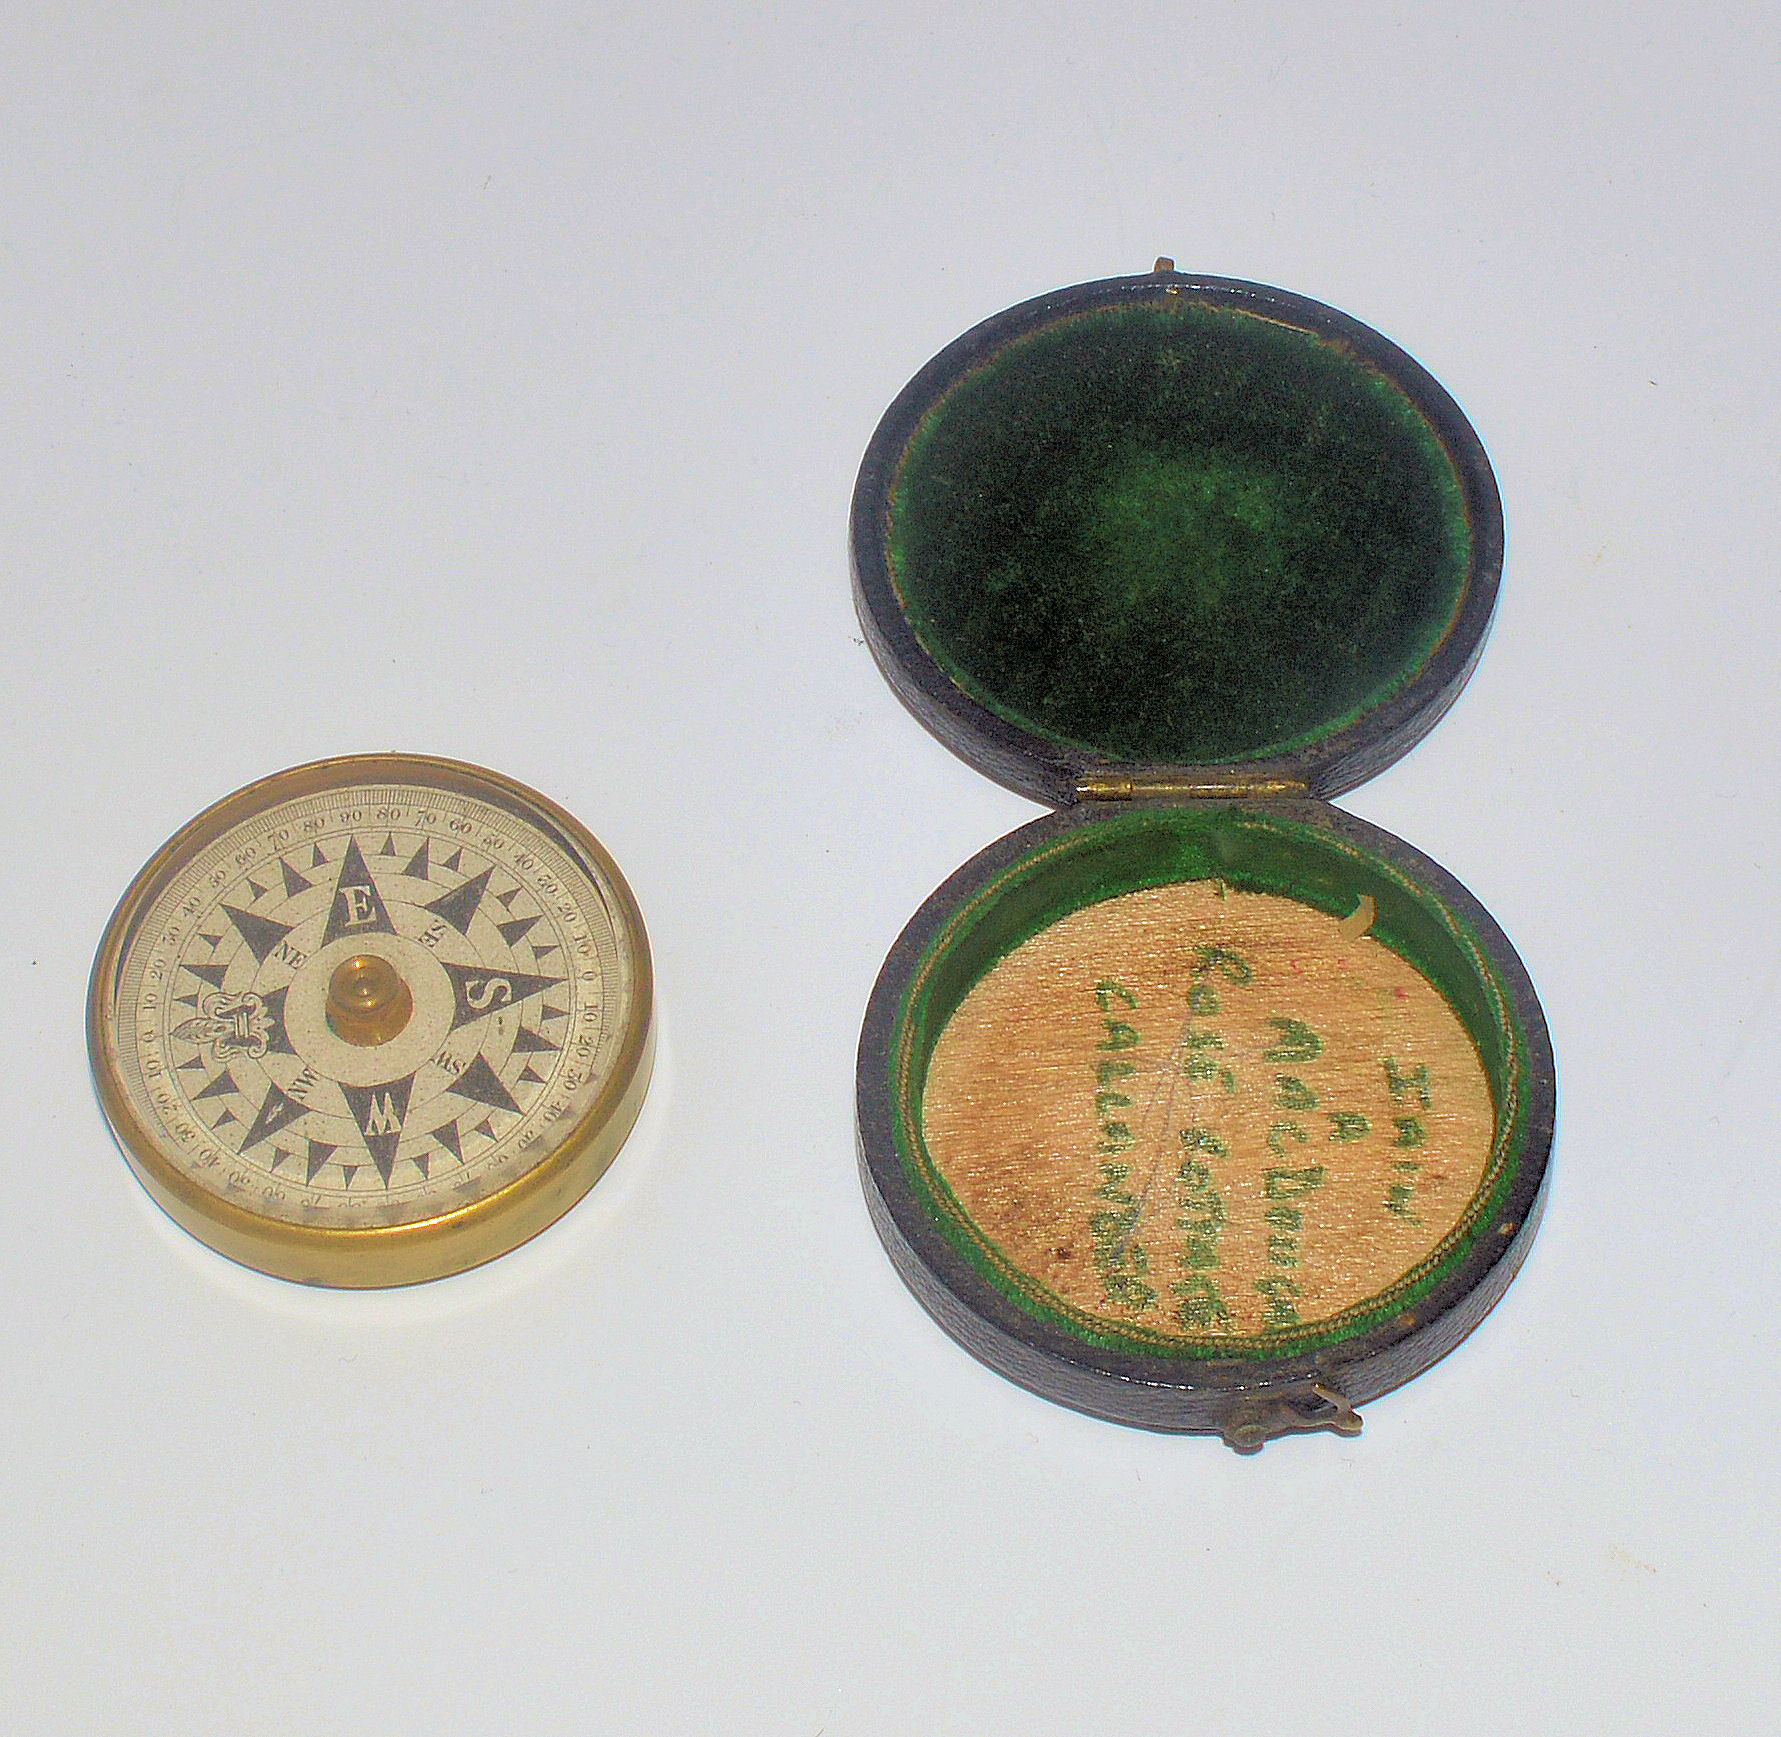 19th century pocket compass.